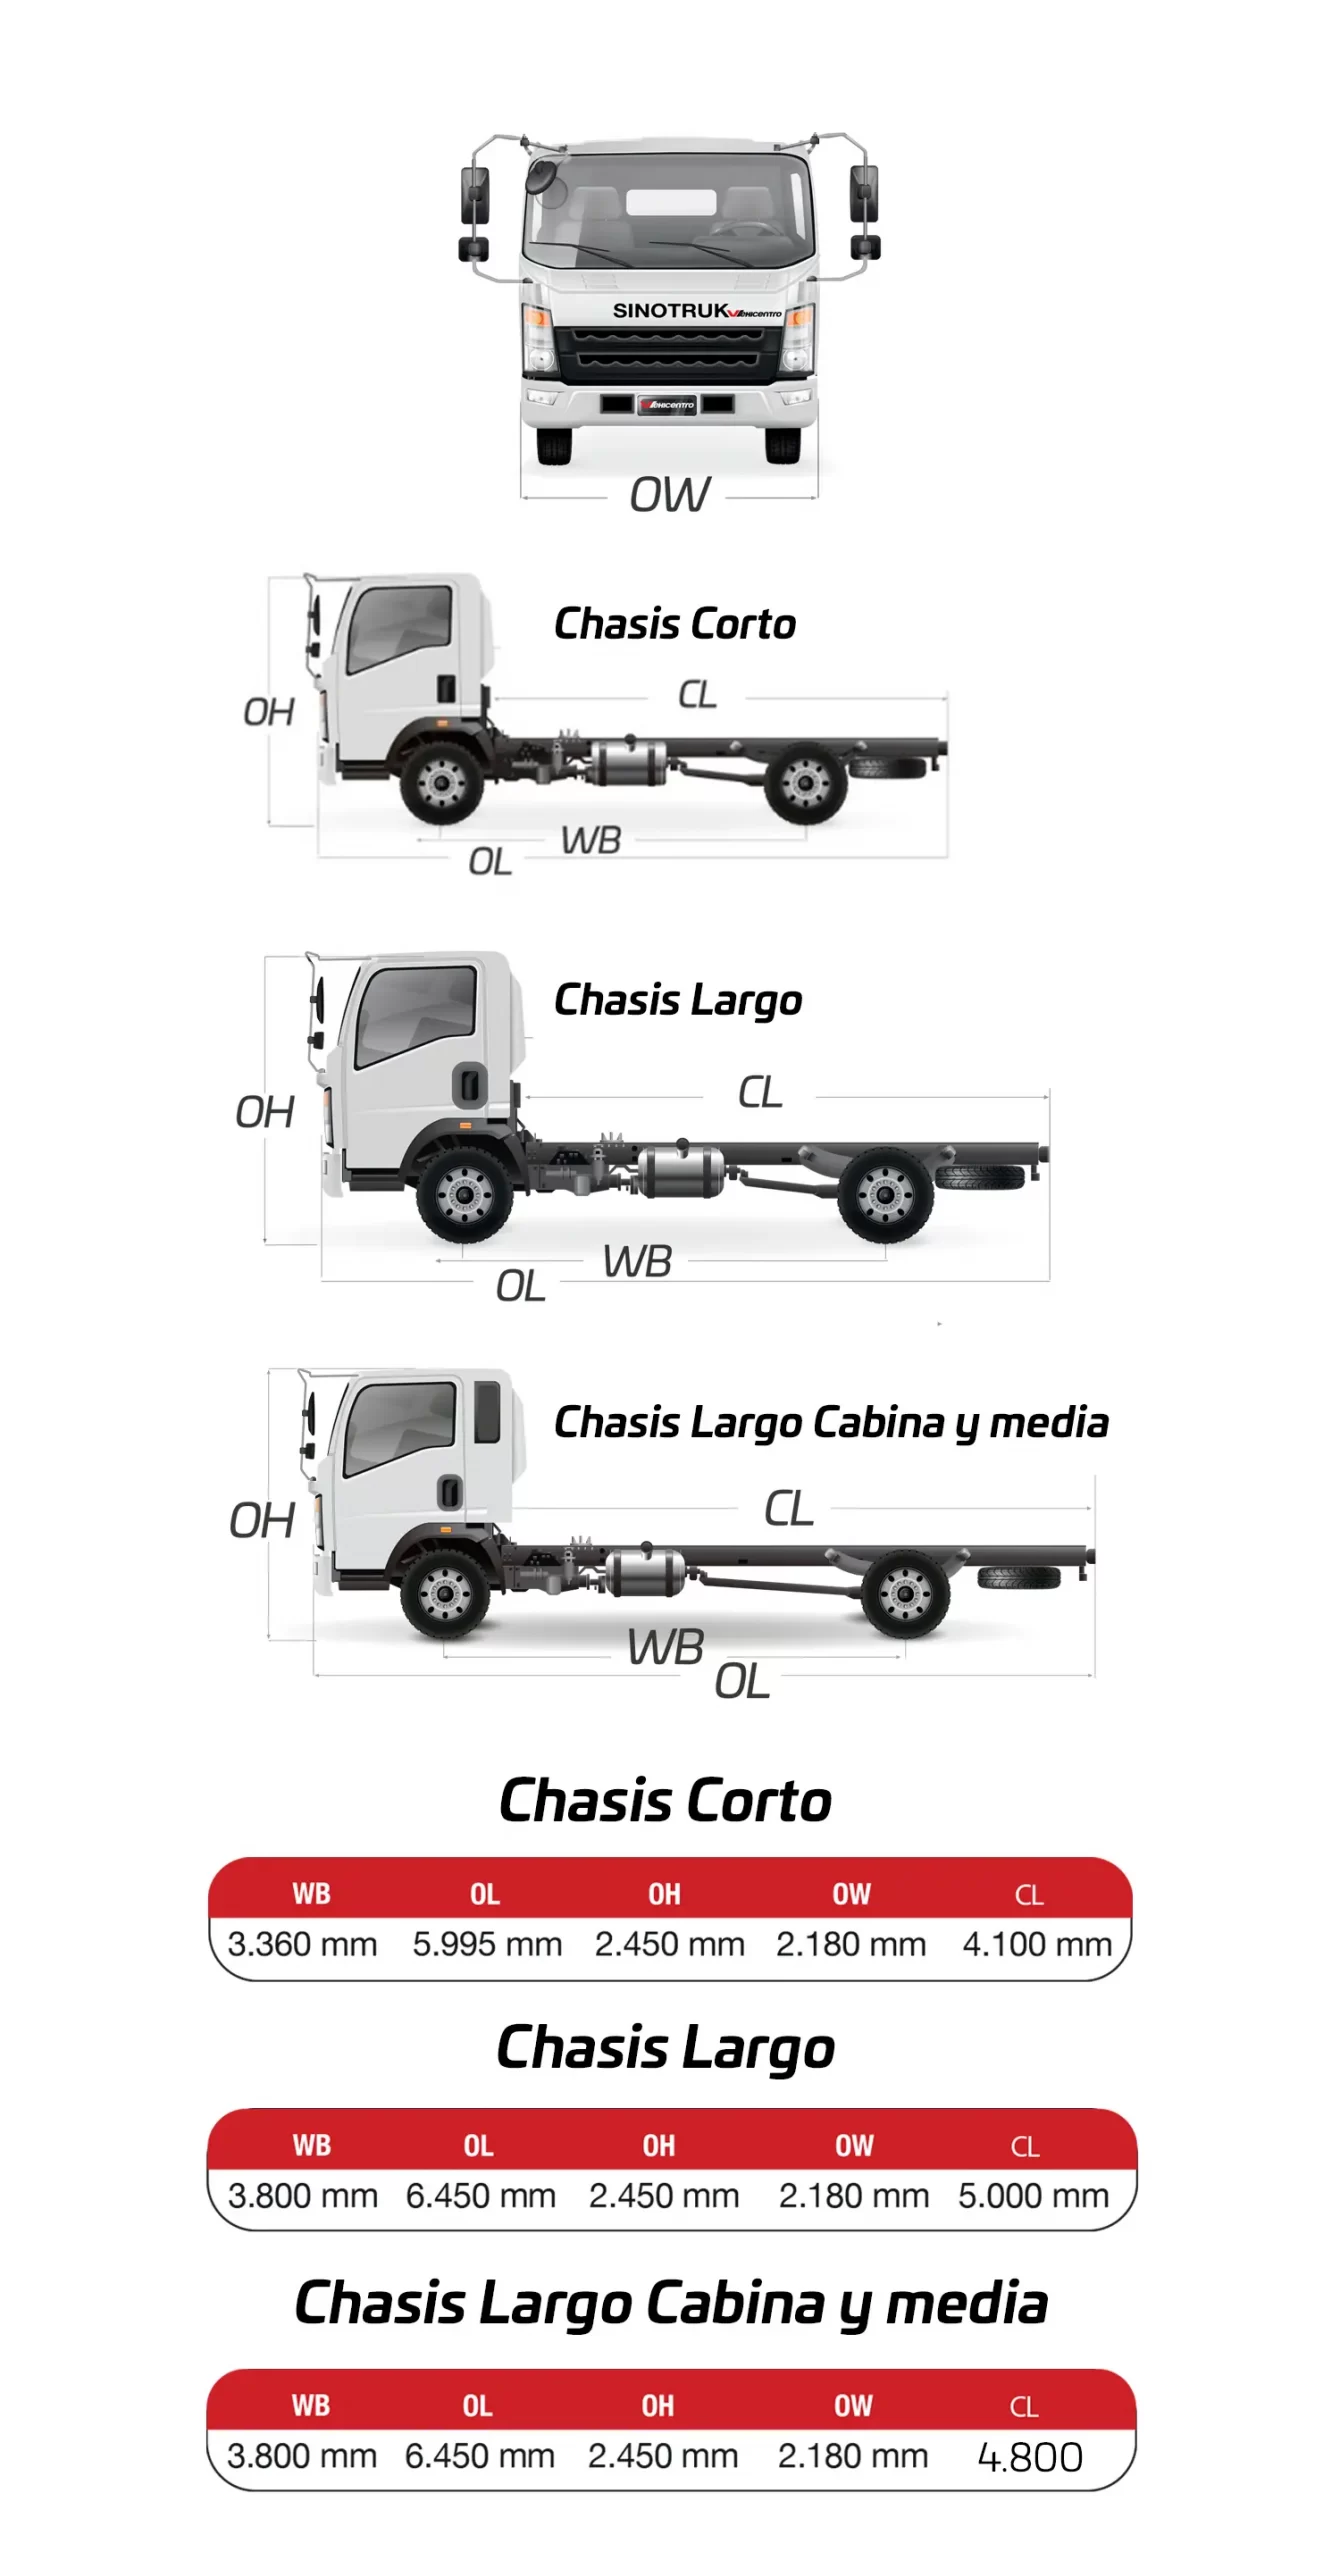 dimensiones-de-camion-de-5-toneladas-sinotruk-responsive